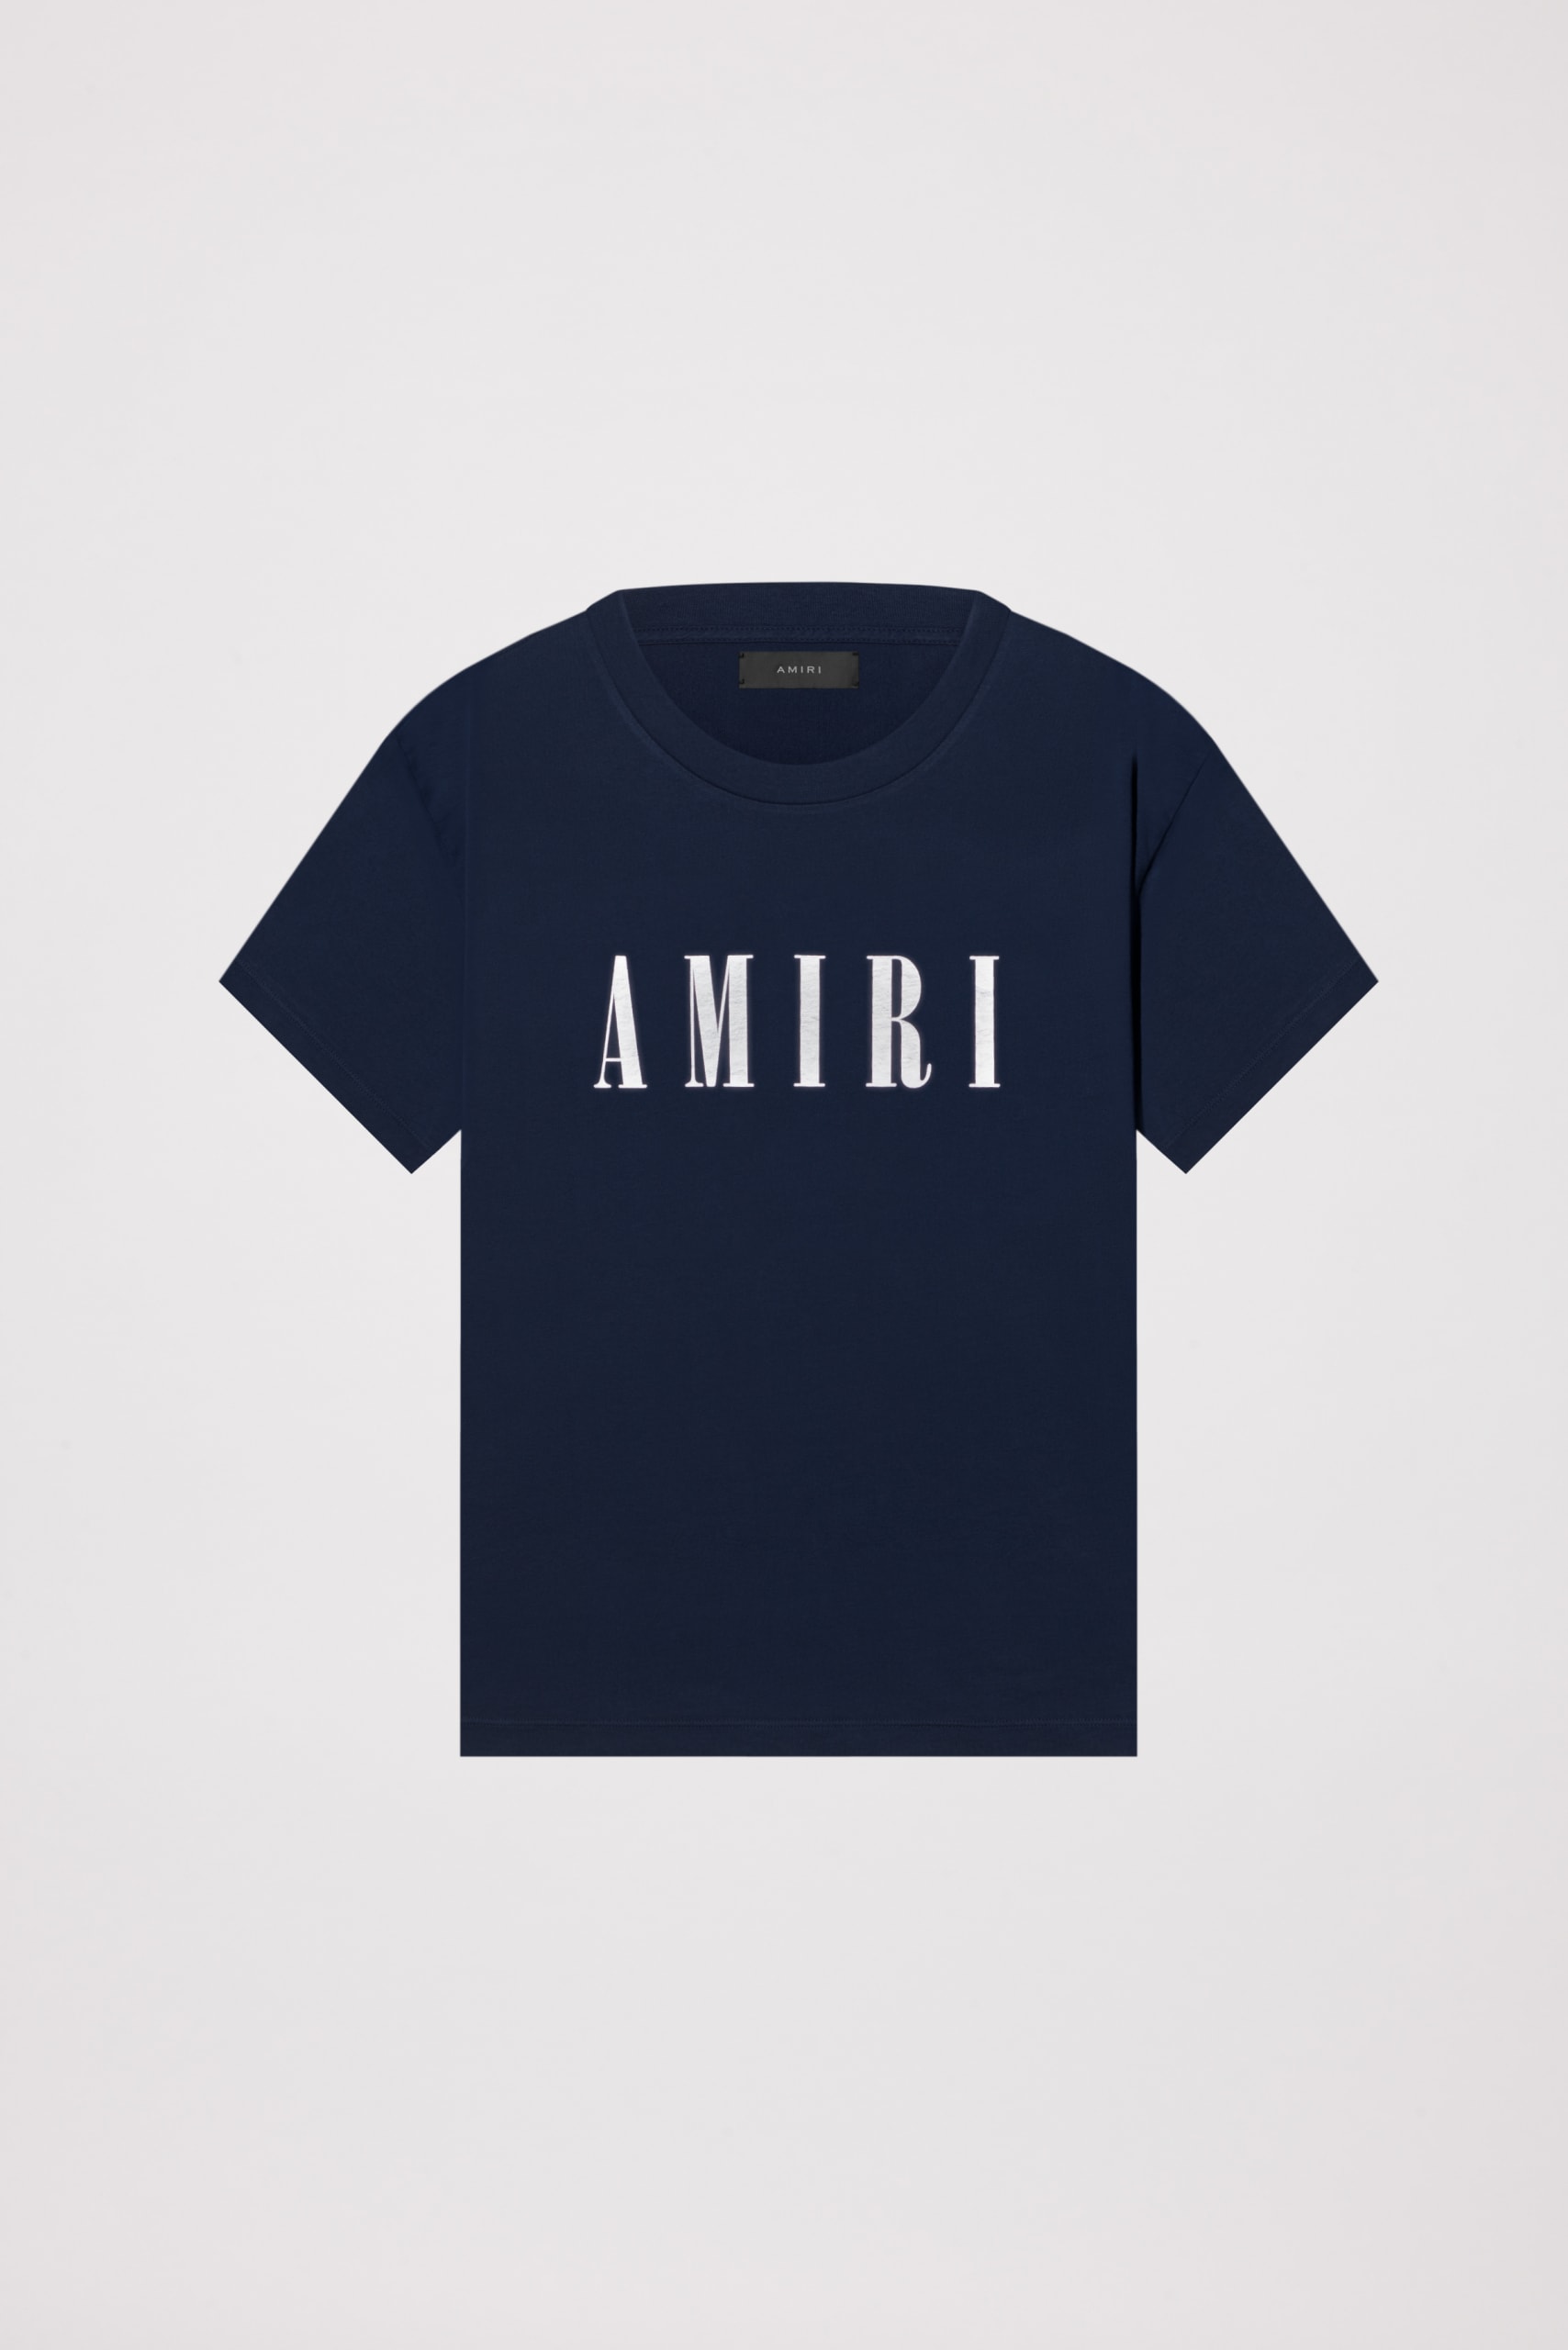 AMIRI 发布中国限定系列